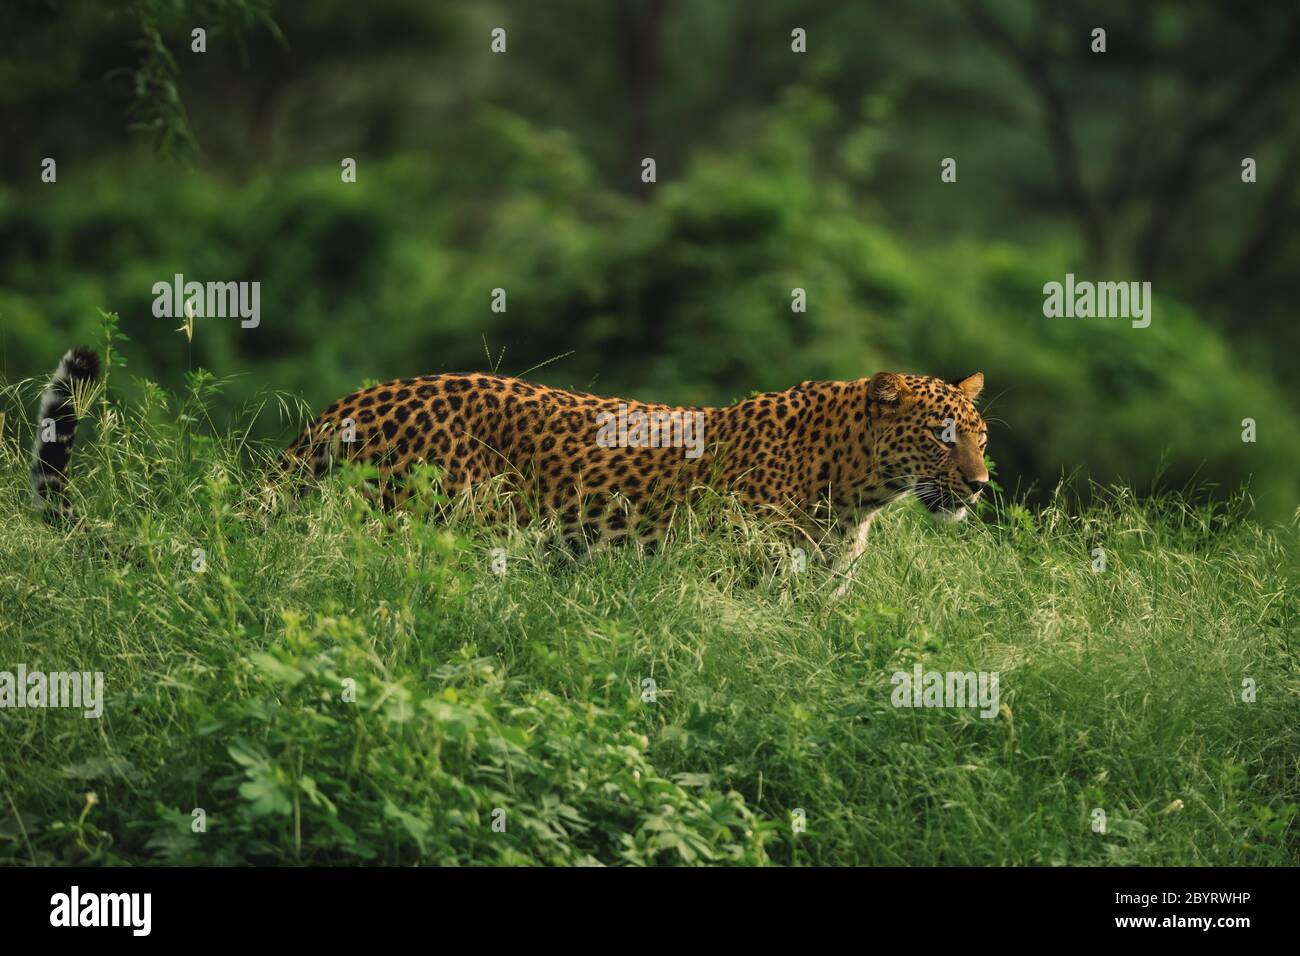 Indian leopard in grass, Panthera pardus fusca, Jhalana, Rajasthan, India  Stock Photo - Alamy